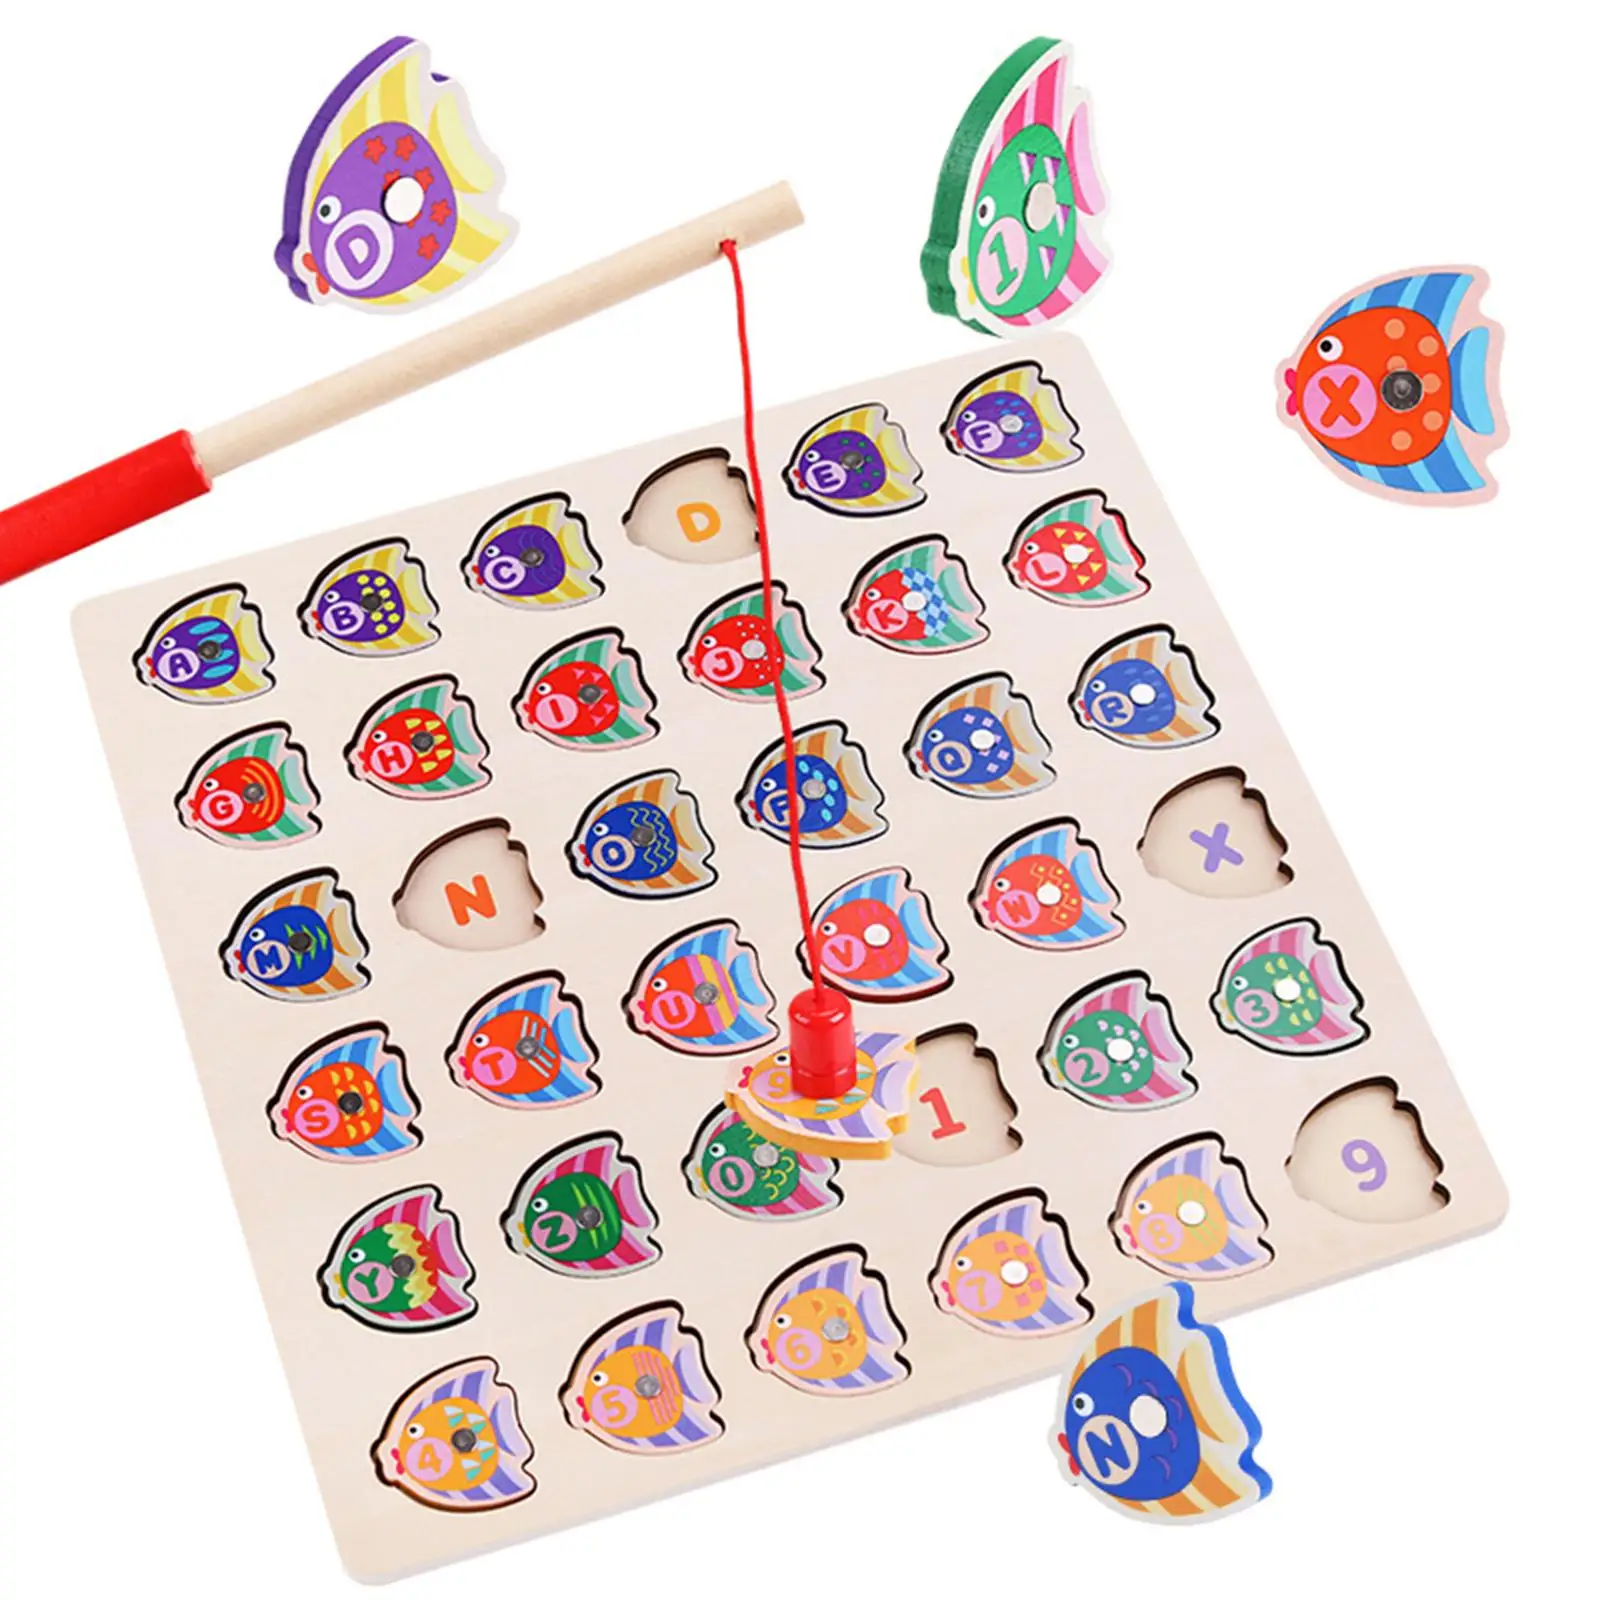 Montessori Fishing Game Play Set Developmental Toys with Fishing Poles for Children